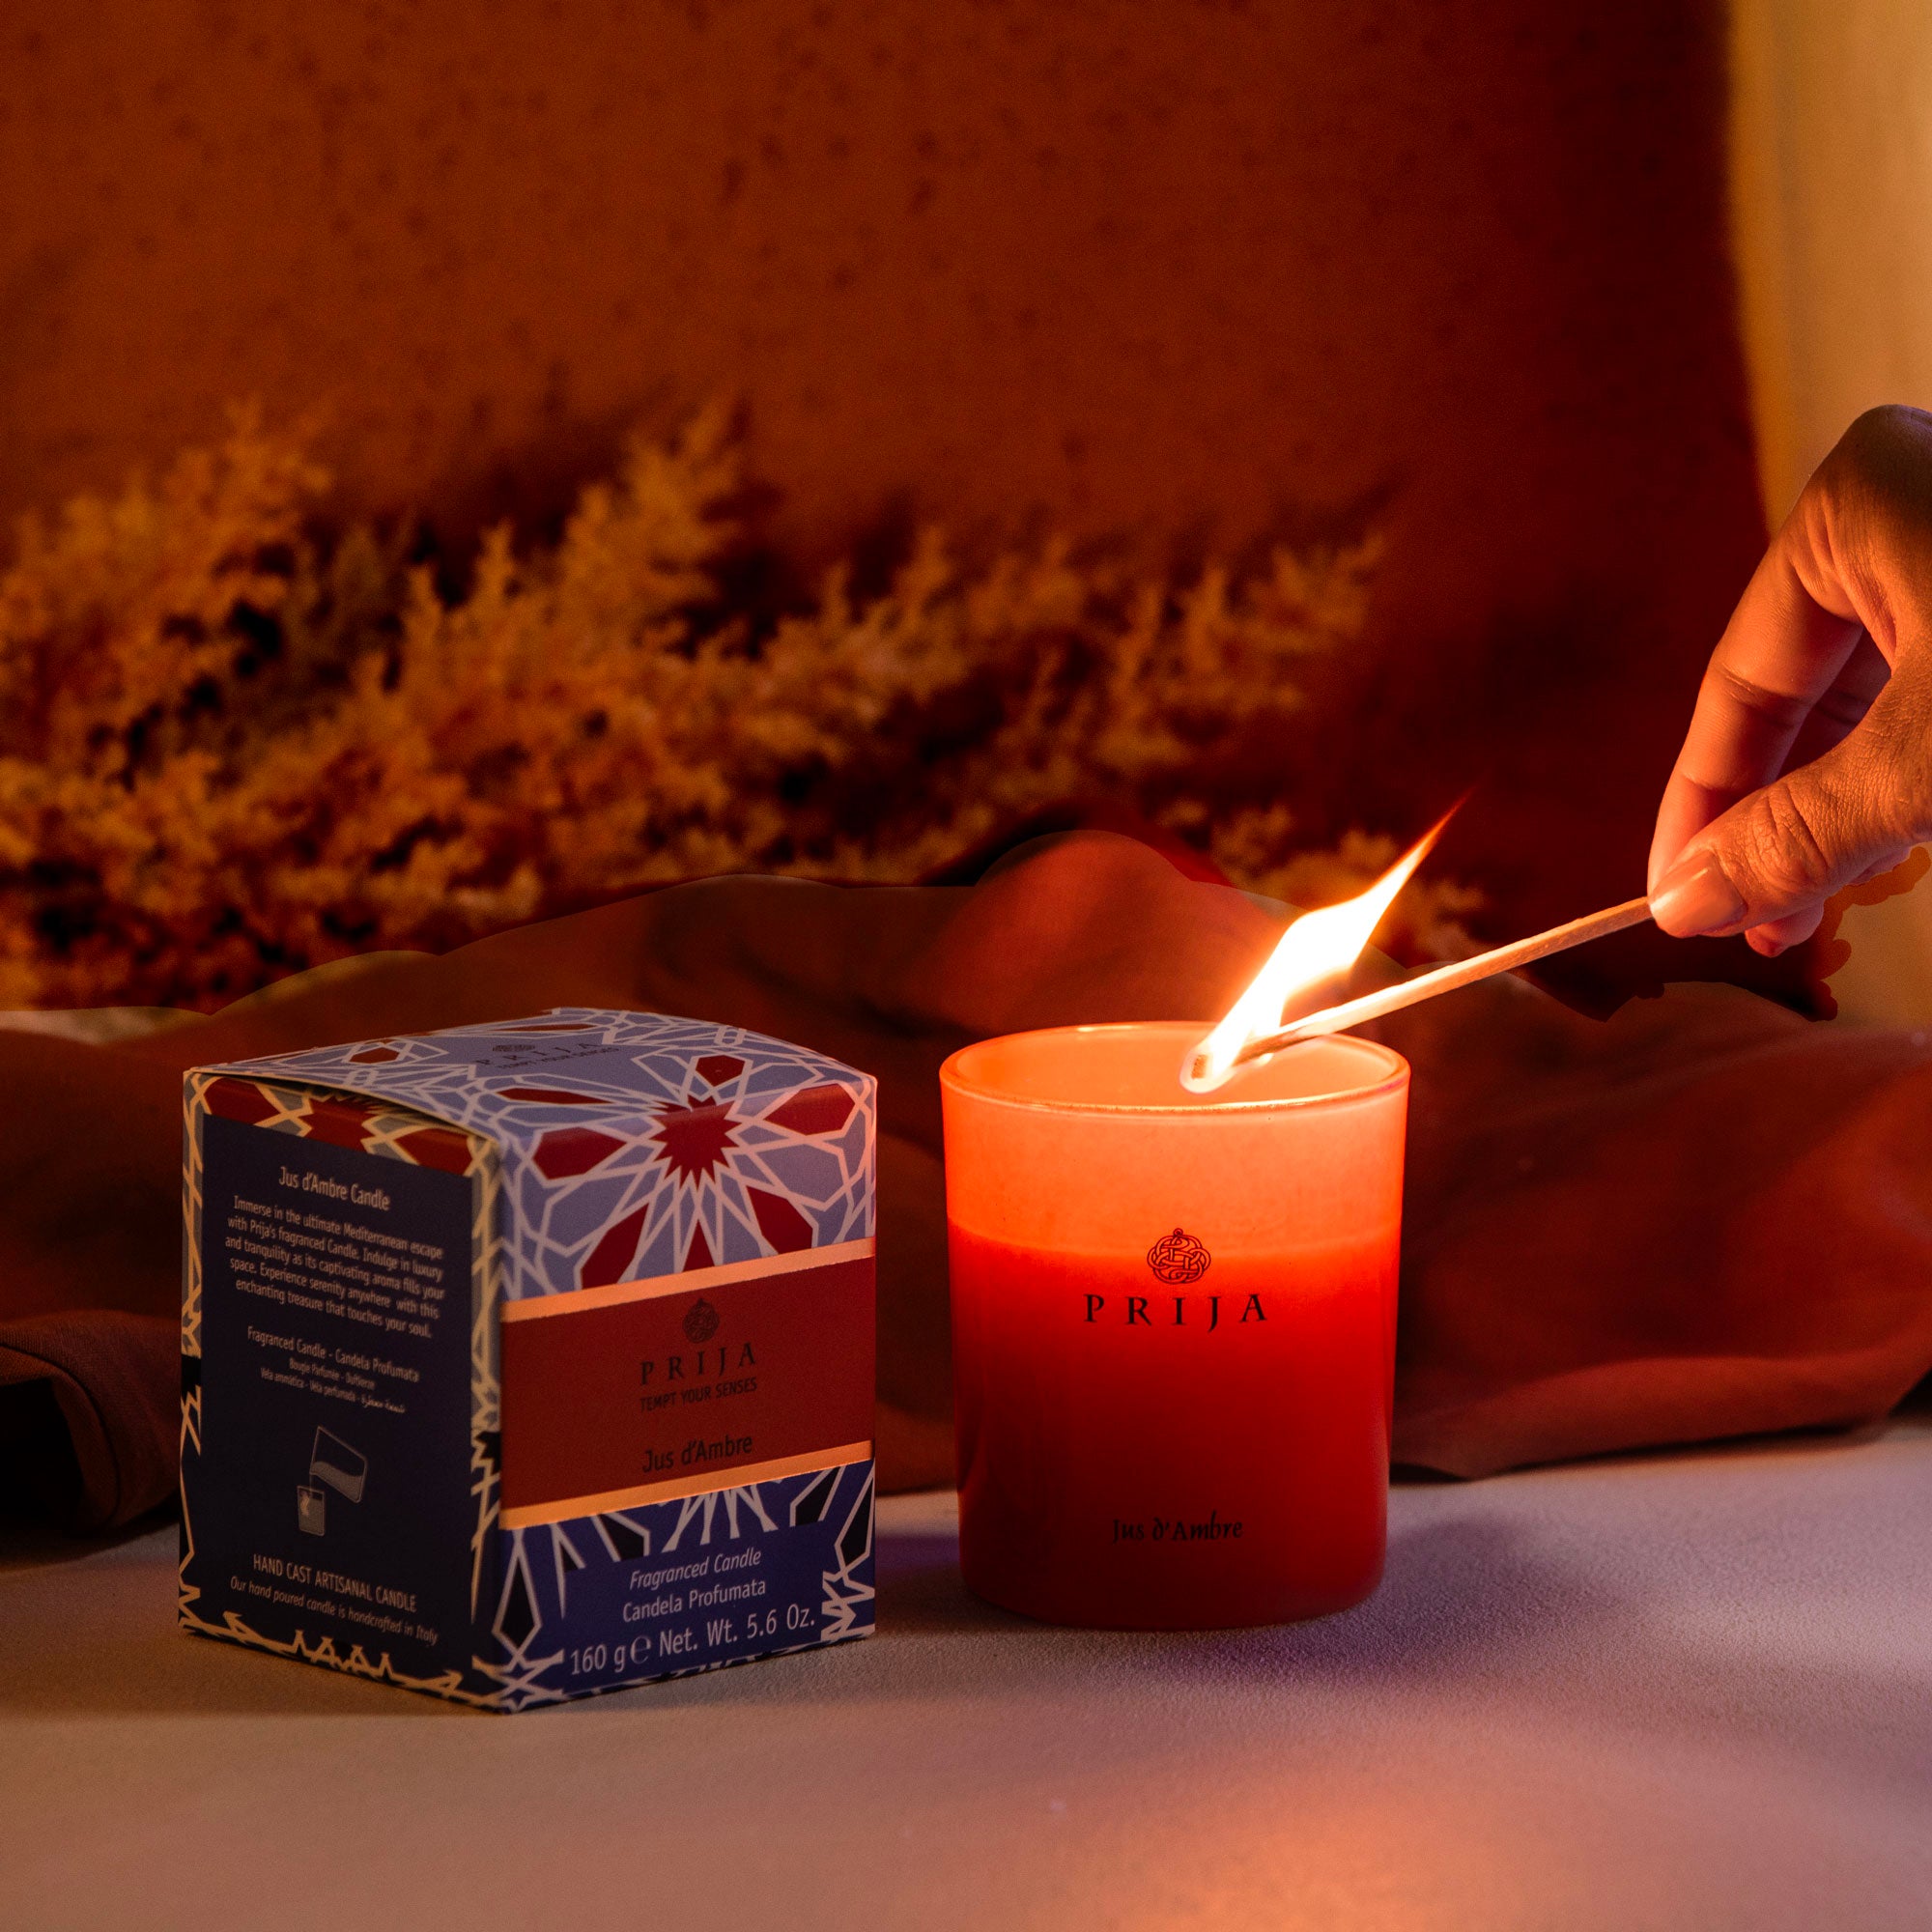 Prija Fragranced Candle, 160g